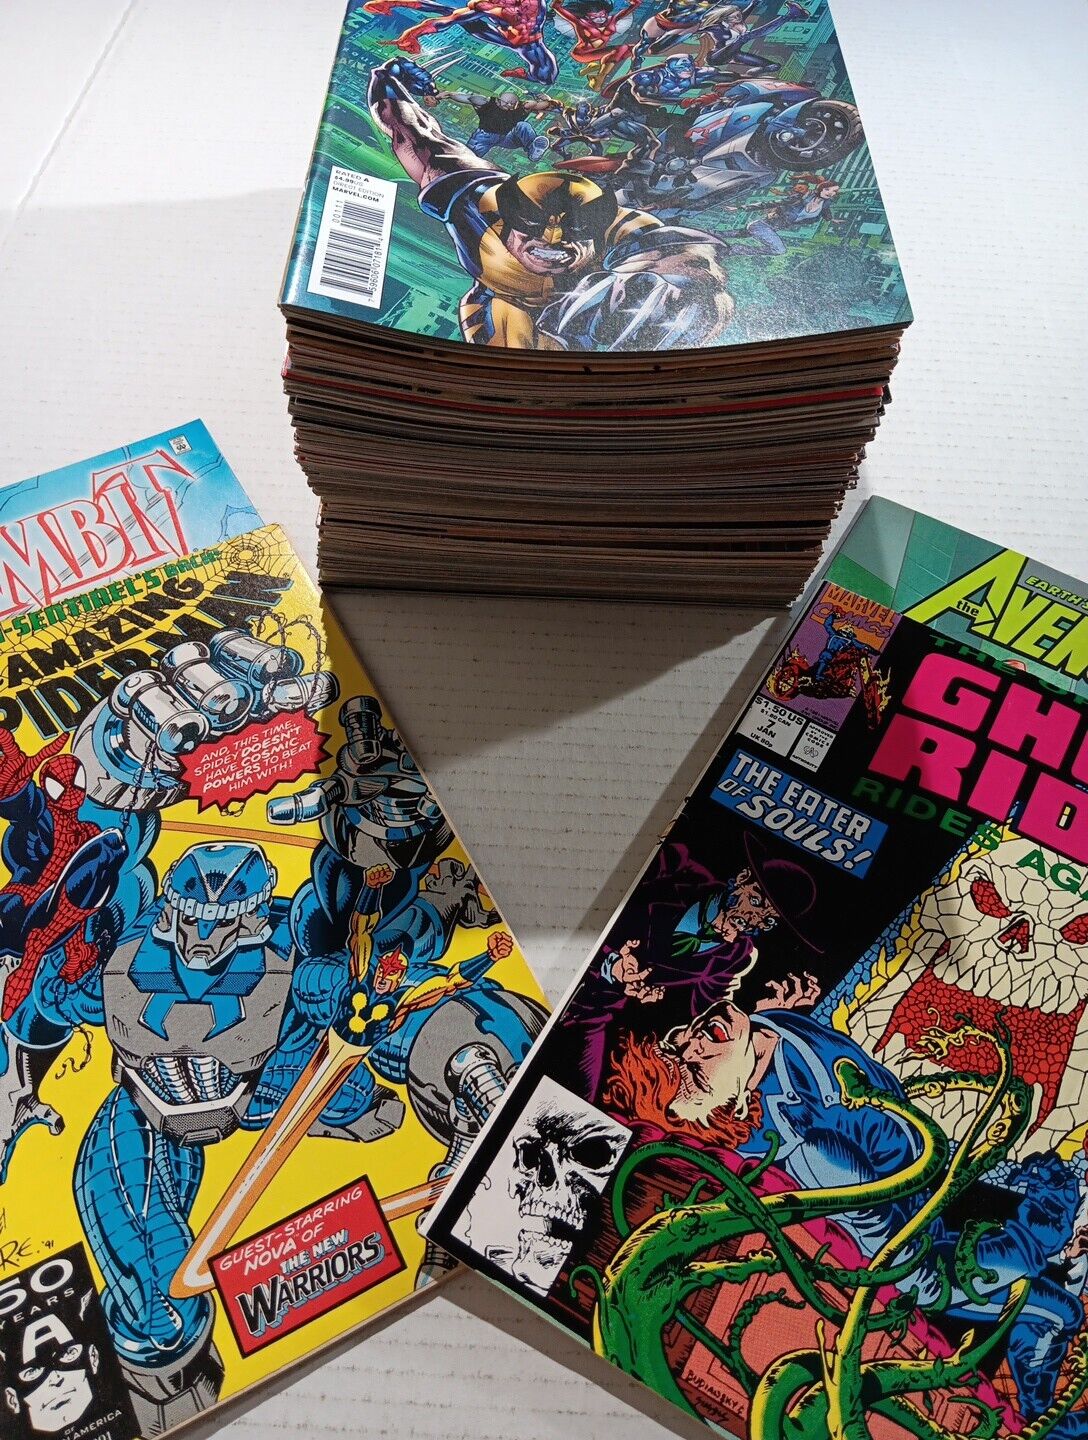 50 Comic Book Lot Marvel